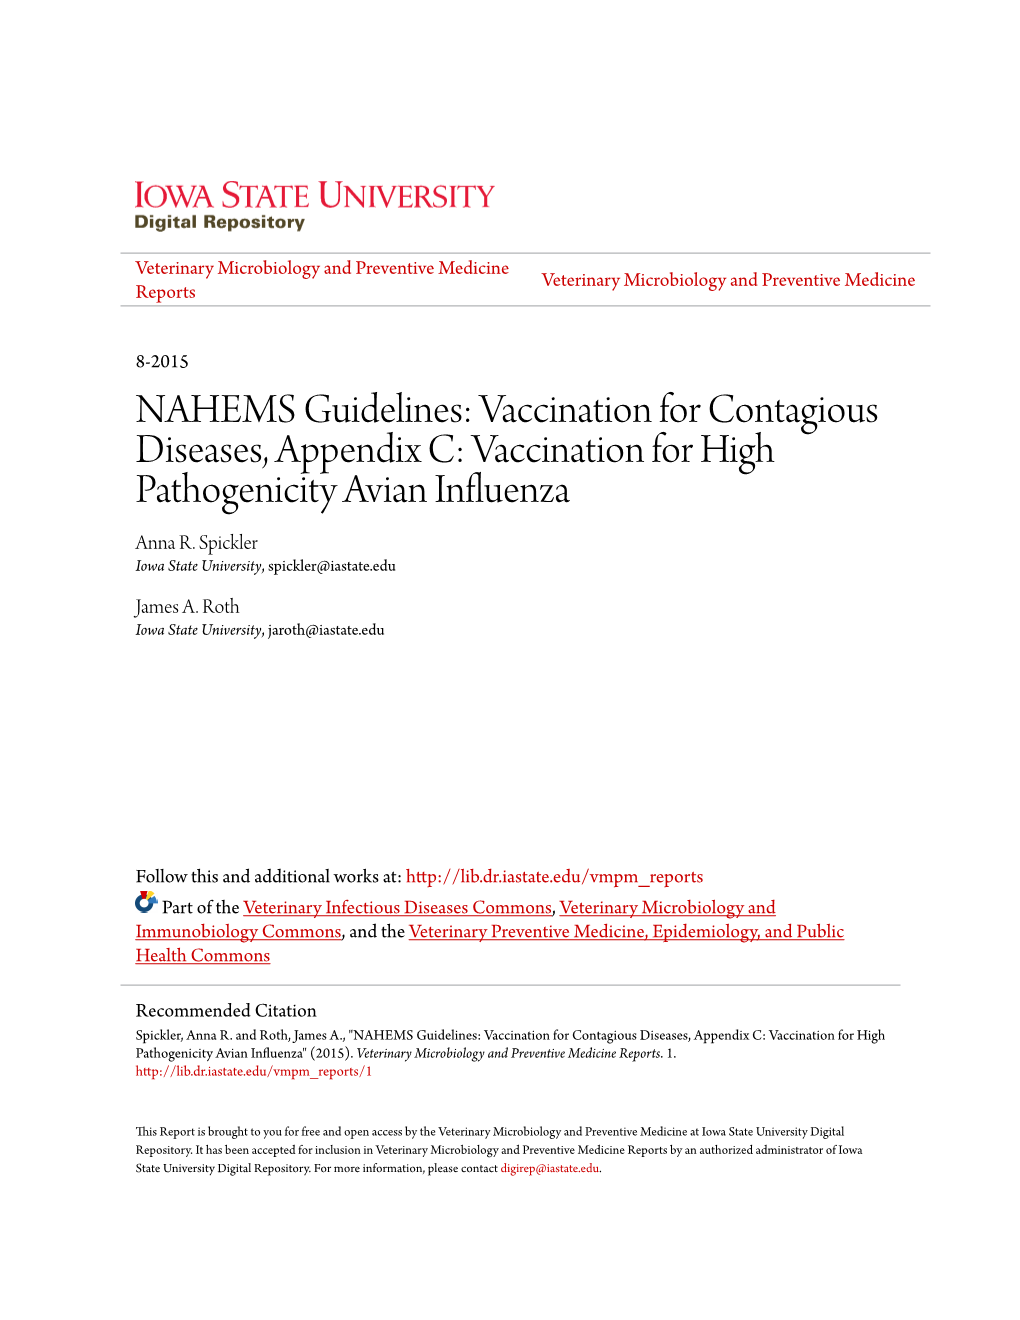 Vaccination for High Pathogenicity Avian Influenza Anna R